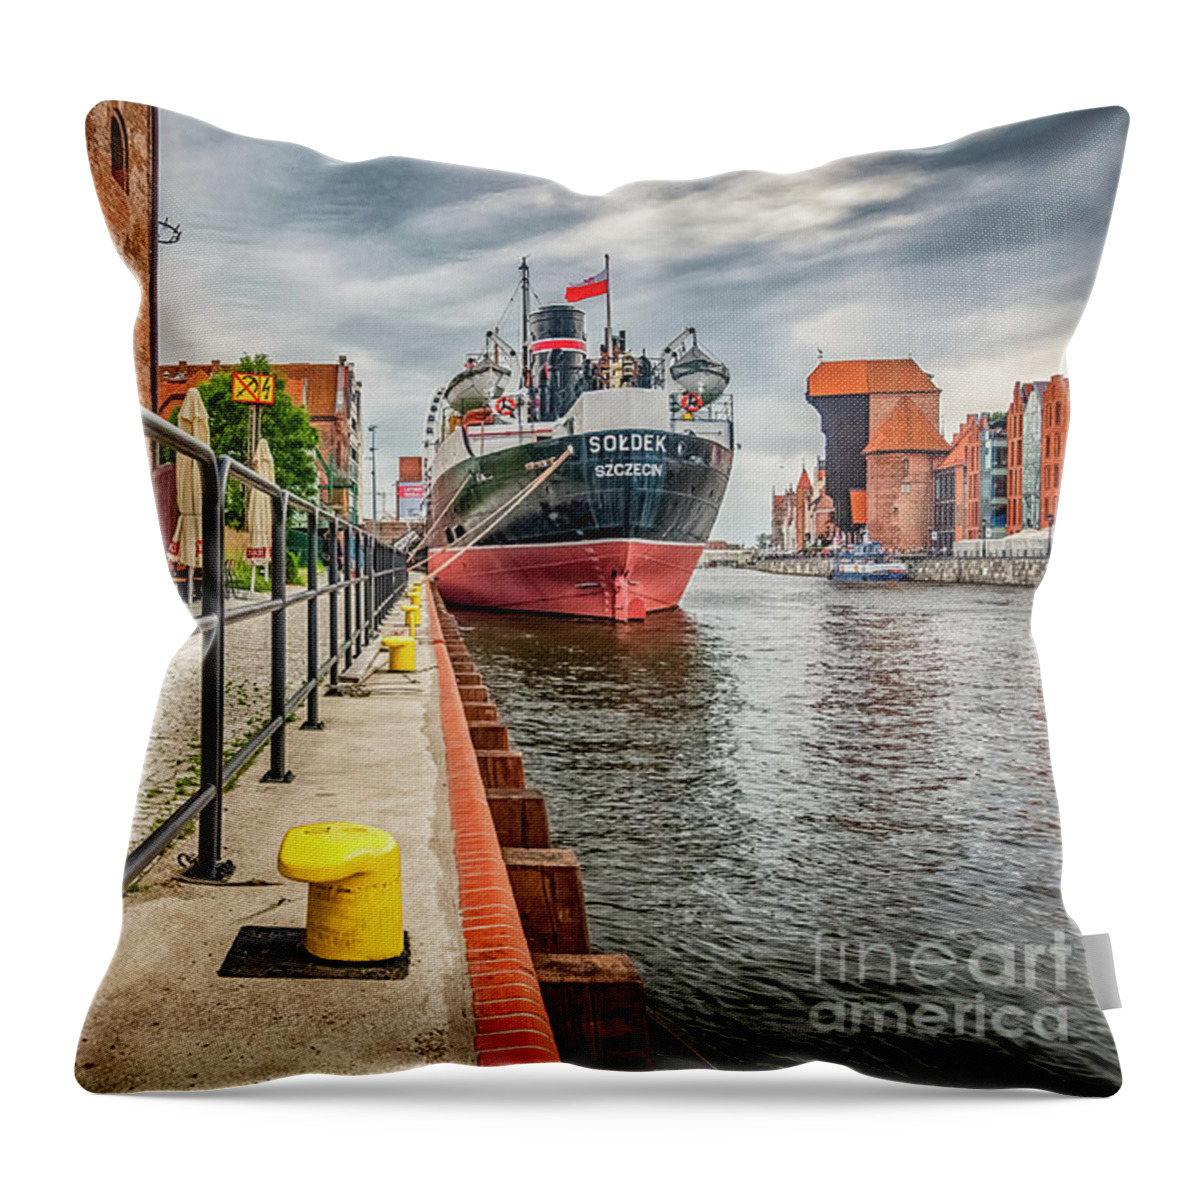 City Throw Pillow featuring the photograph Gdansk by Mariusz Talarek